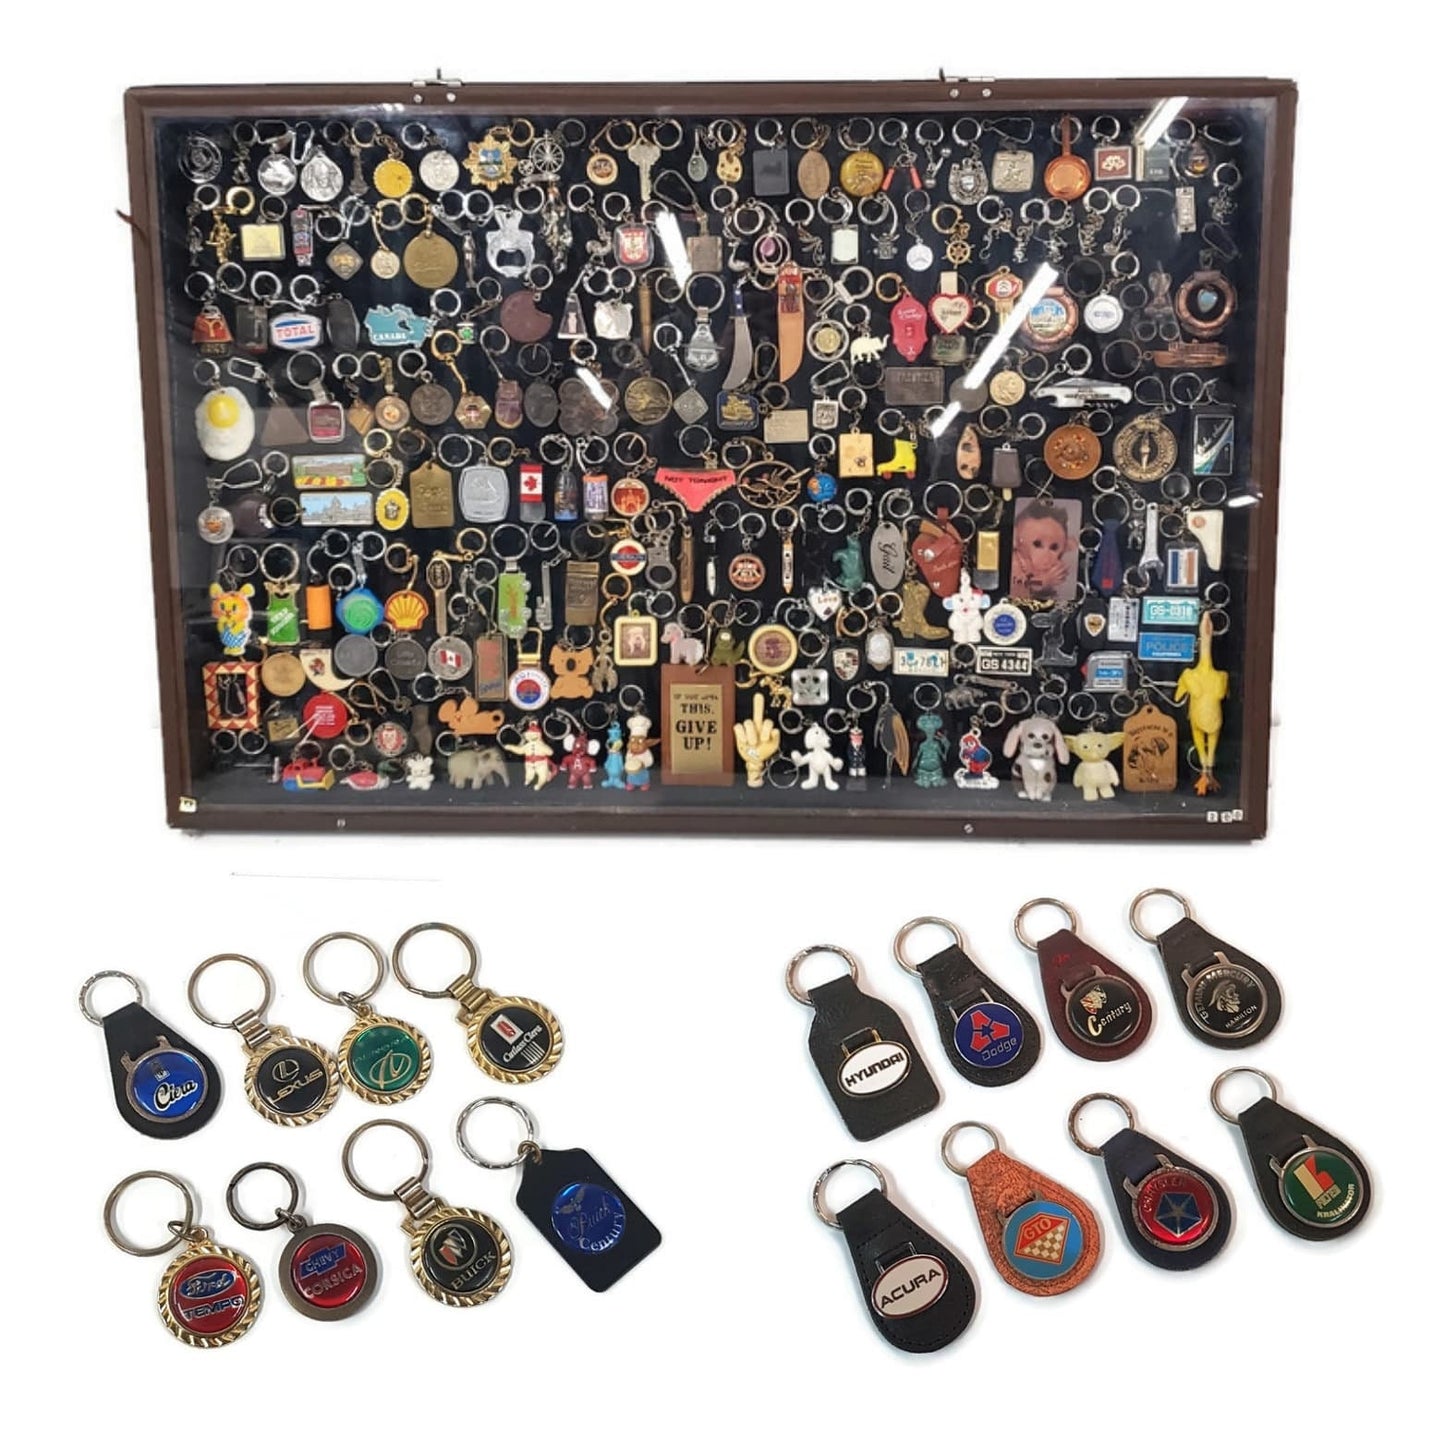 toyota key chain keychain key fob keytag vintage automotove keychain gift collectible